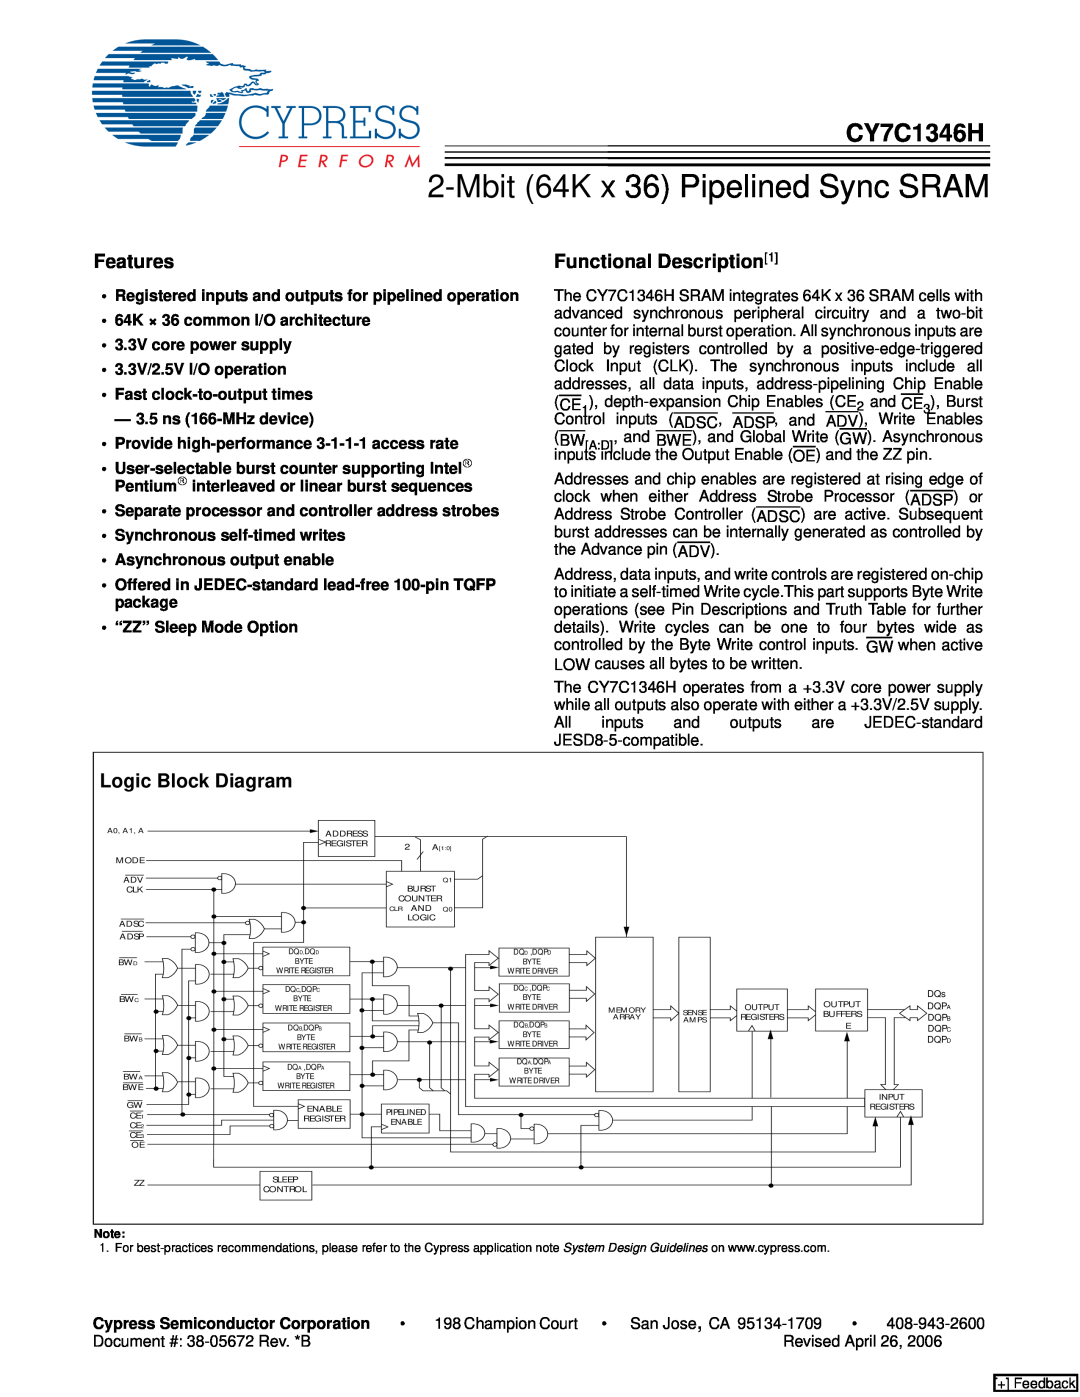 Cypress CY7C1346H manual Features, Logic Block Diagram, Functional Description, Mbit 64K x 36 Pipelined Sync SRAM 